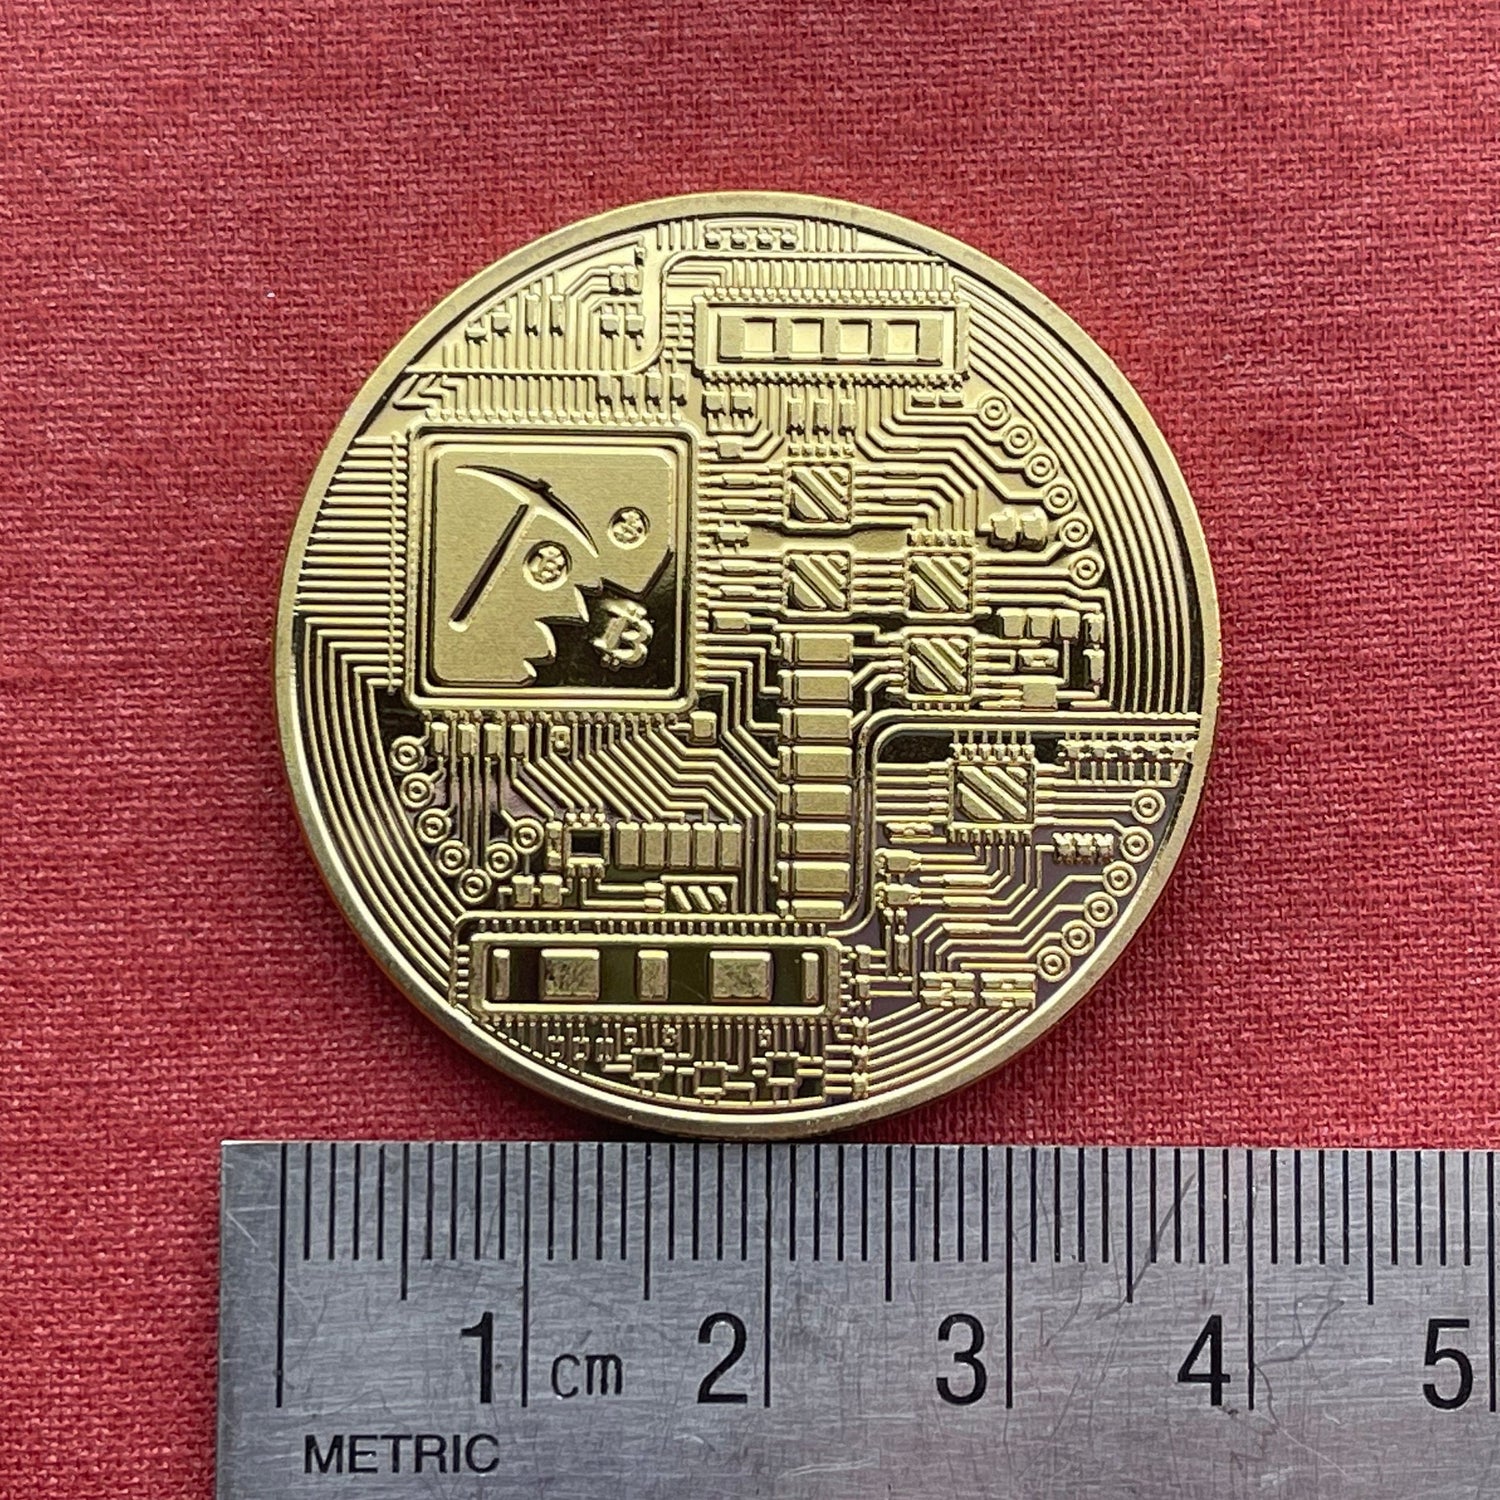 Bitcoin Logo Charm with Miner's Axe & Circuitboard 24-Karat Gold-plated Novelty Medallion (No Monetary Value) (Cryptocurrency) (BTC Mining)